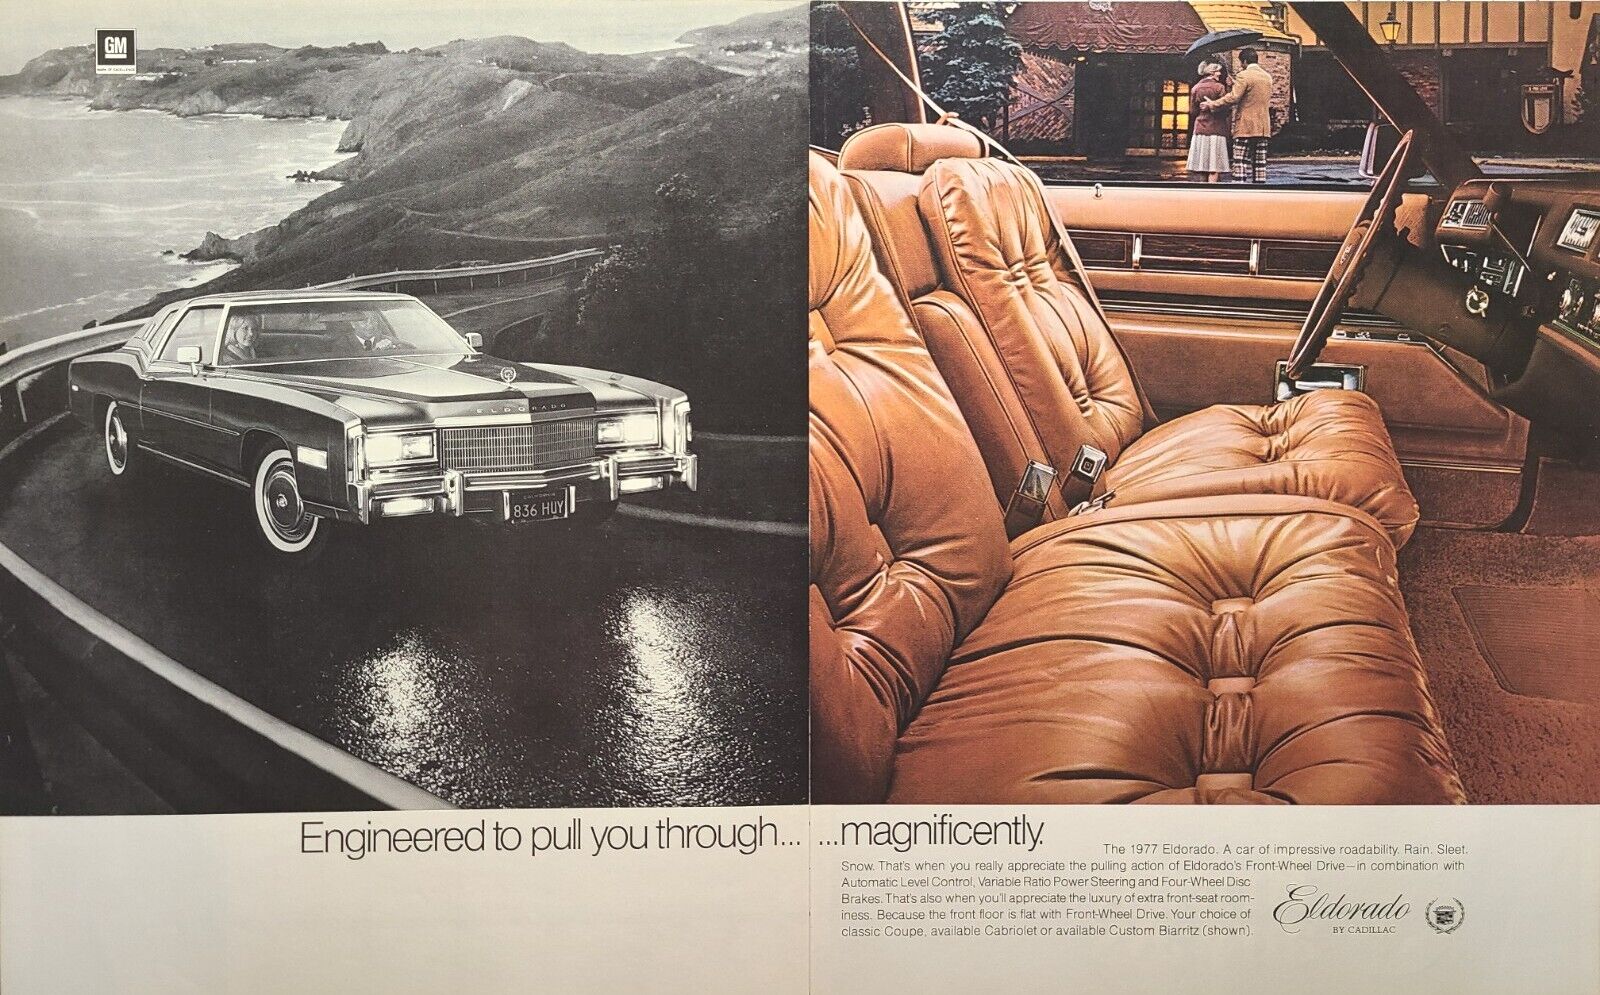 '77 Cadillac Eldorado Biarritz Coast Highway Tan Leather Vintage Print Ad 1977